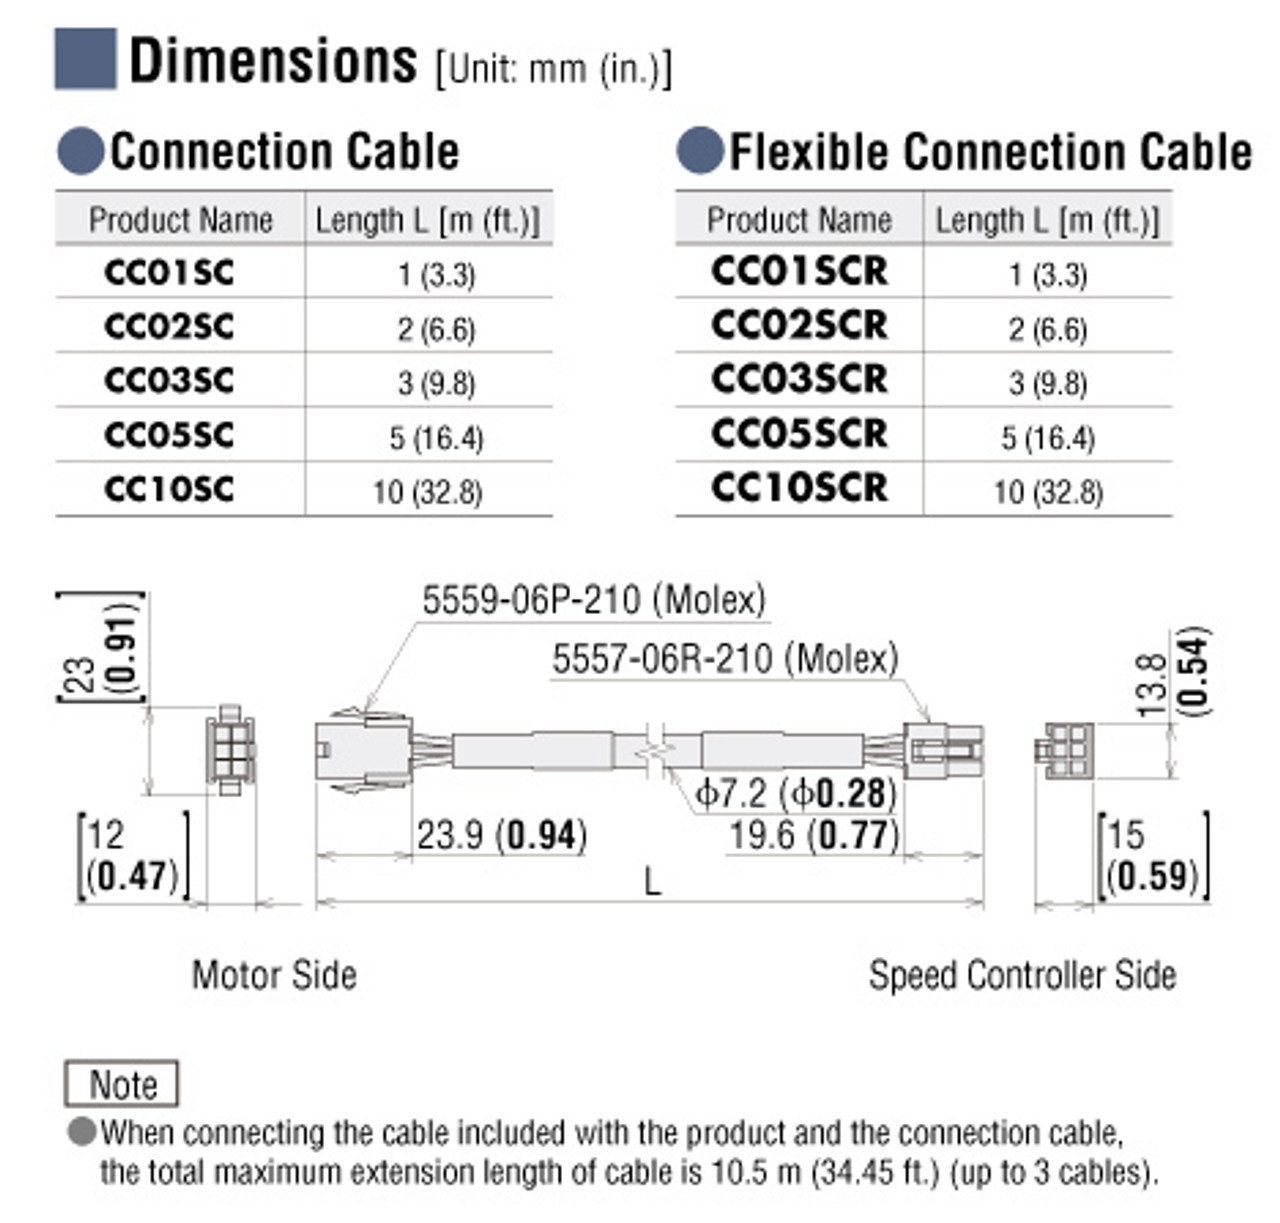 CC05SCR - Dimensions